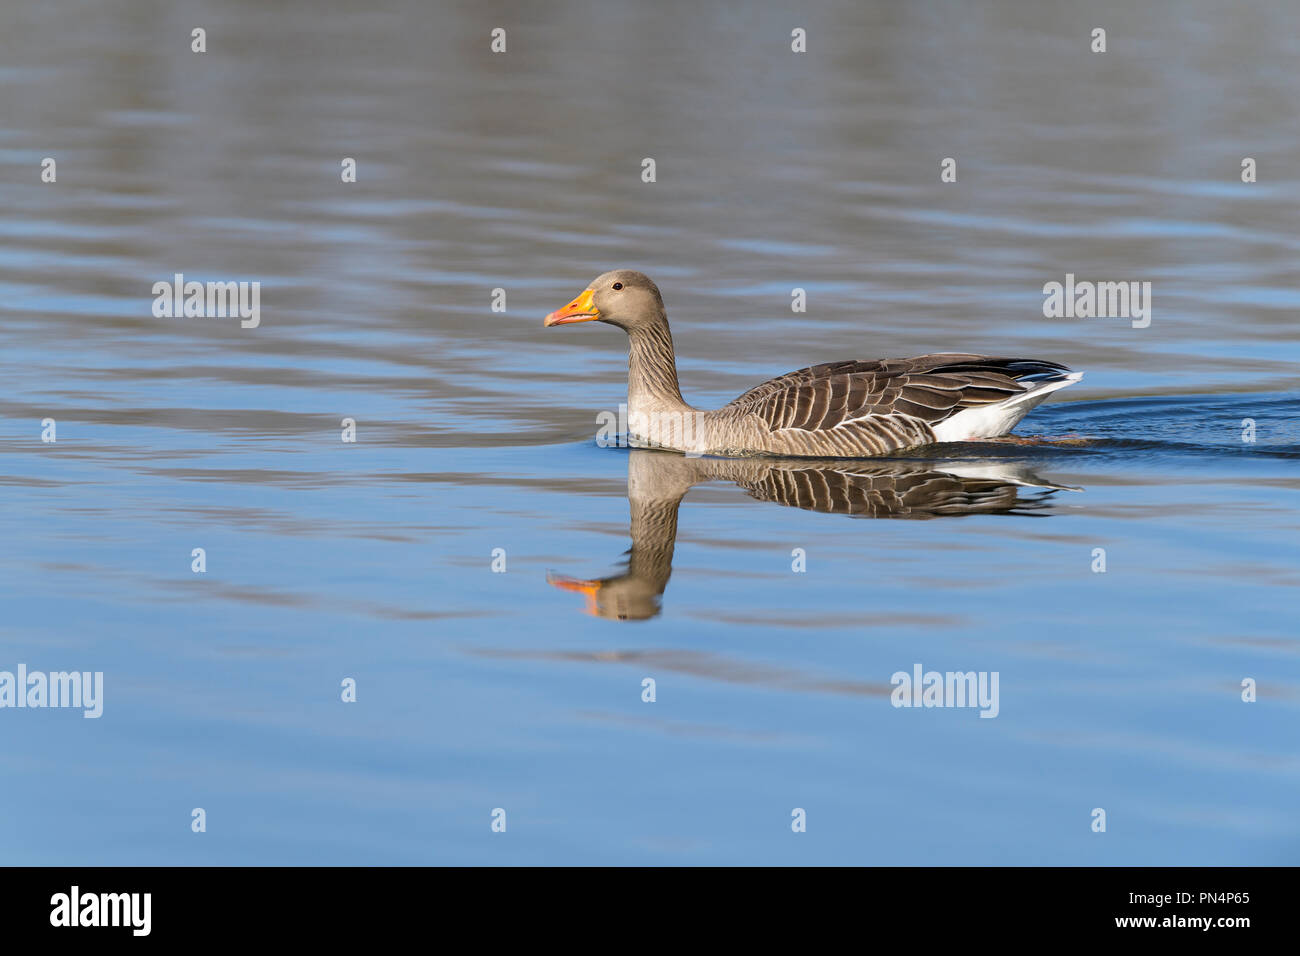 Greylag Goose, Anser anser, in water swimming Stock Photo